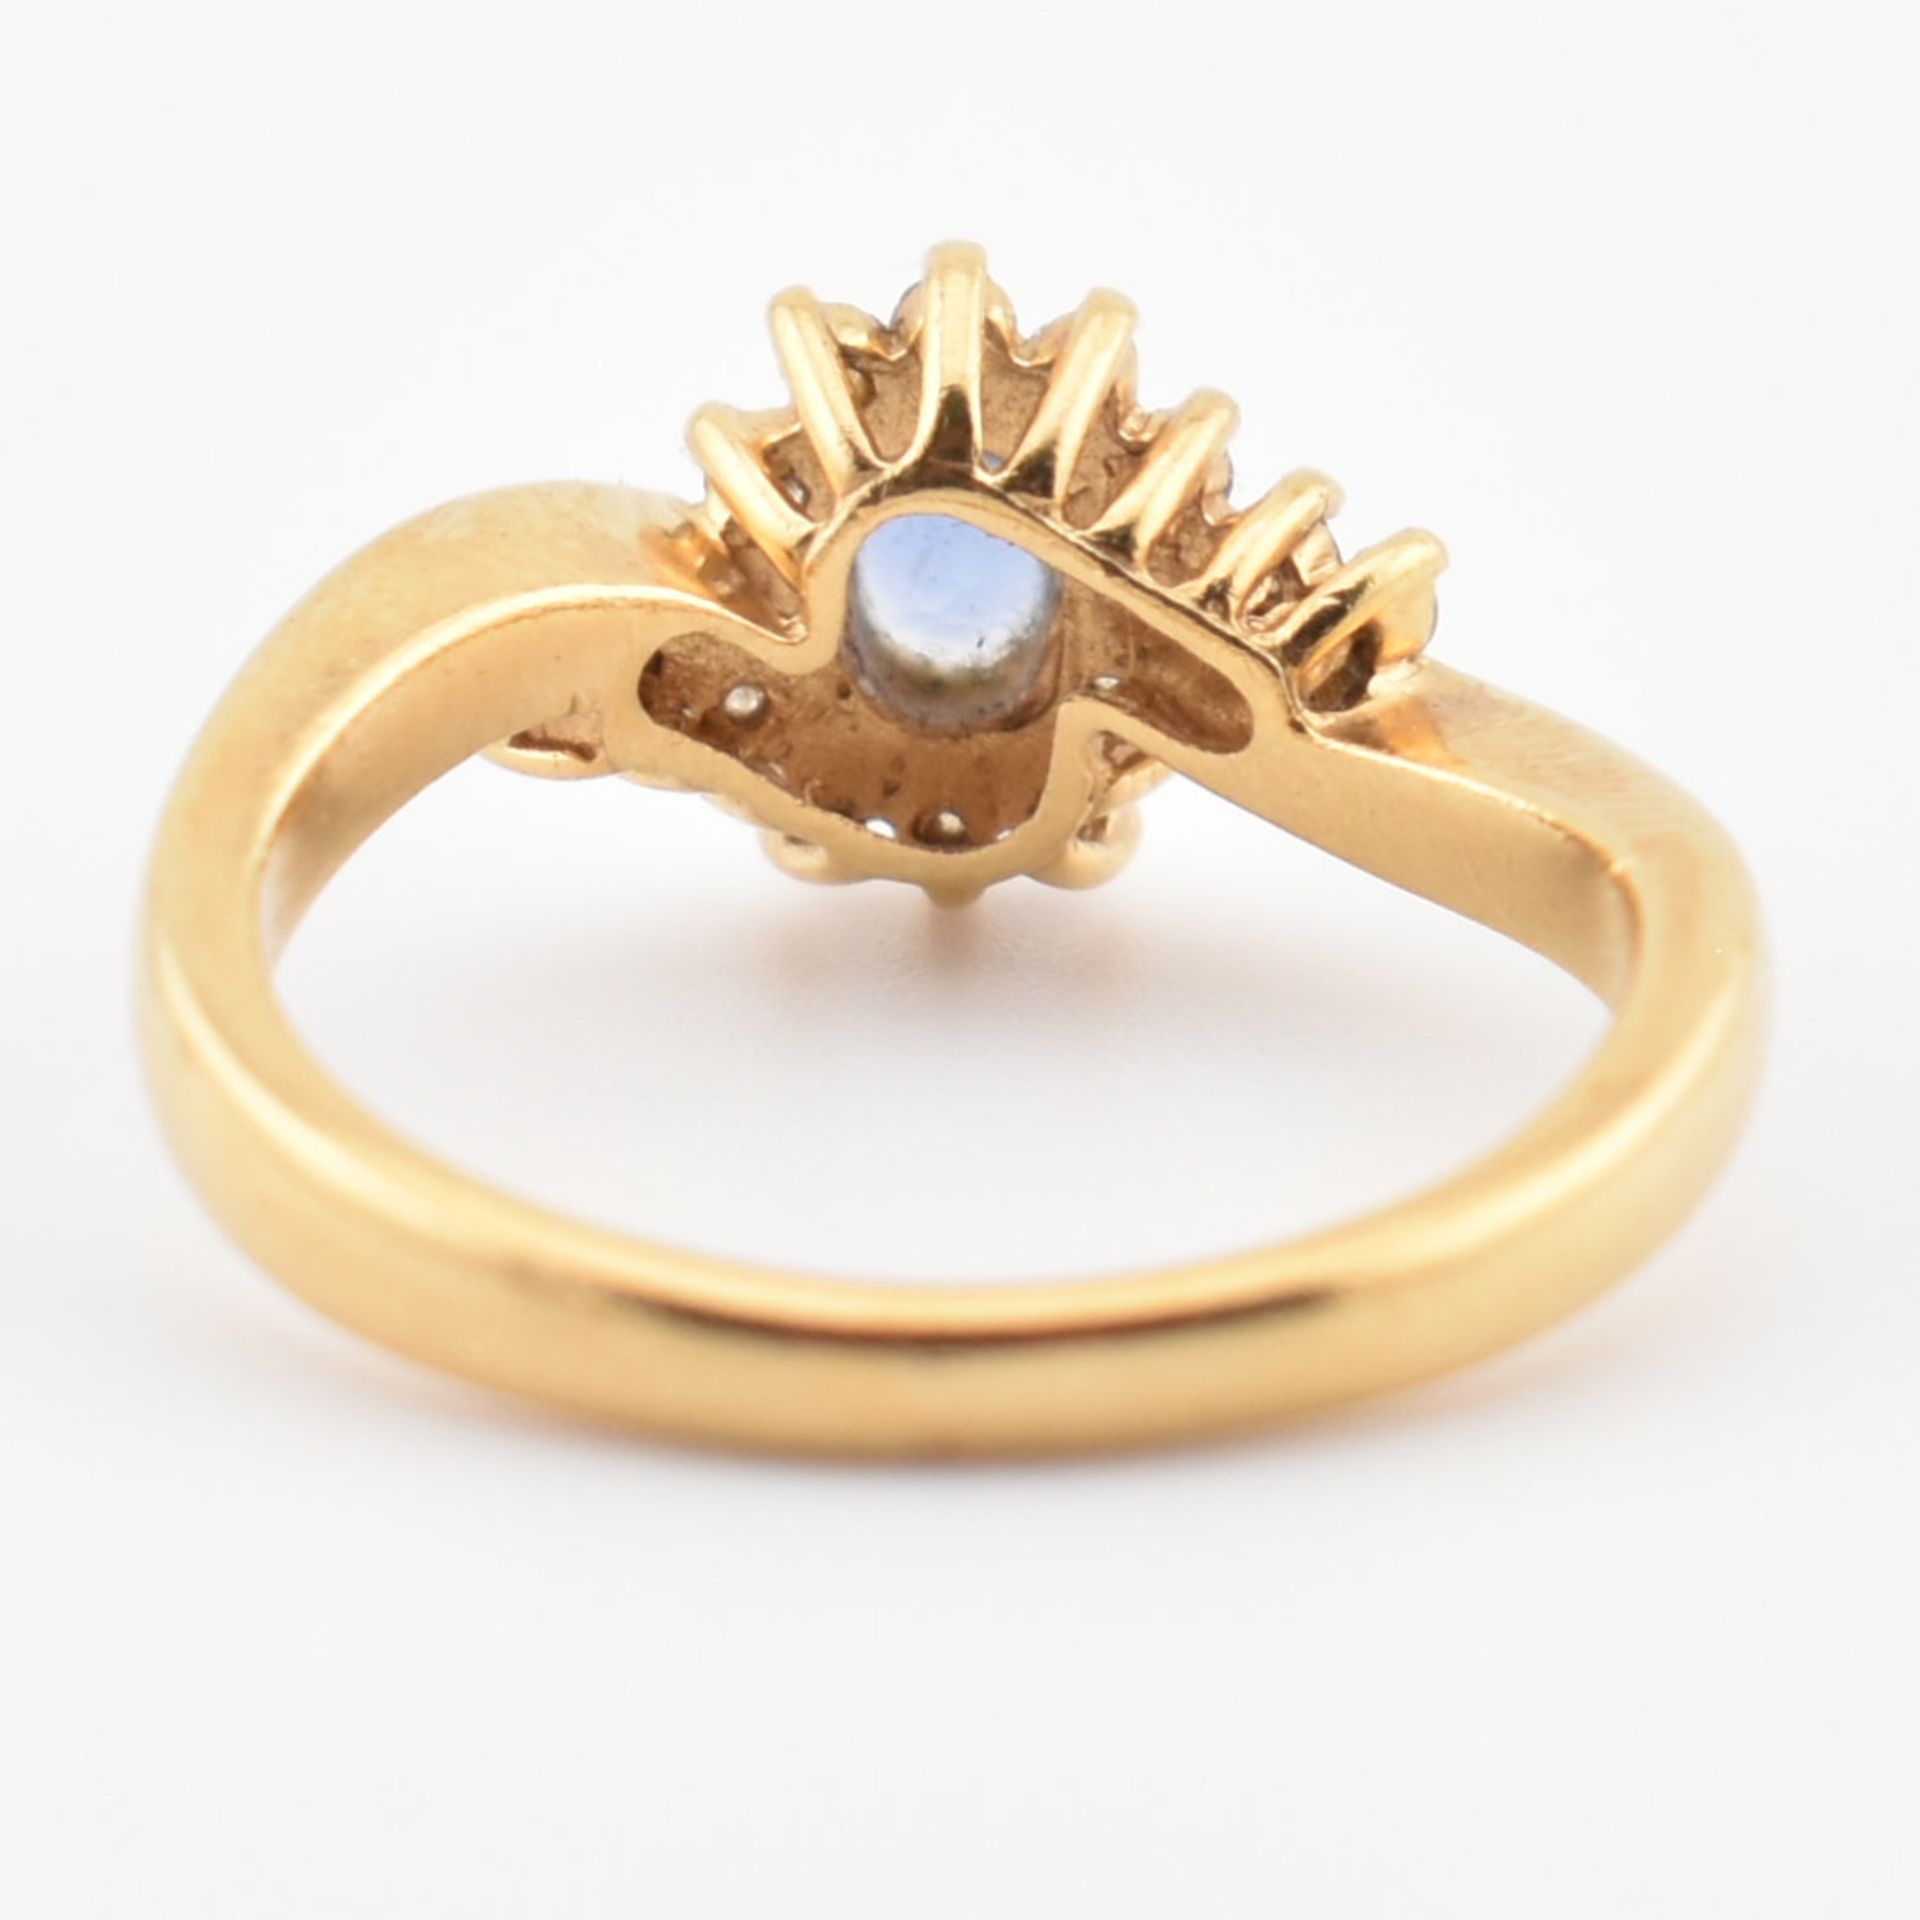 HALLMARKED 18CT GOLD CEYLON SAPPHIRE & DIAMOND RING - Image 5 of 8